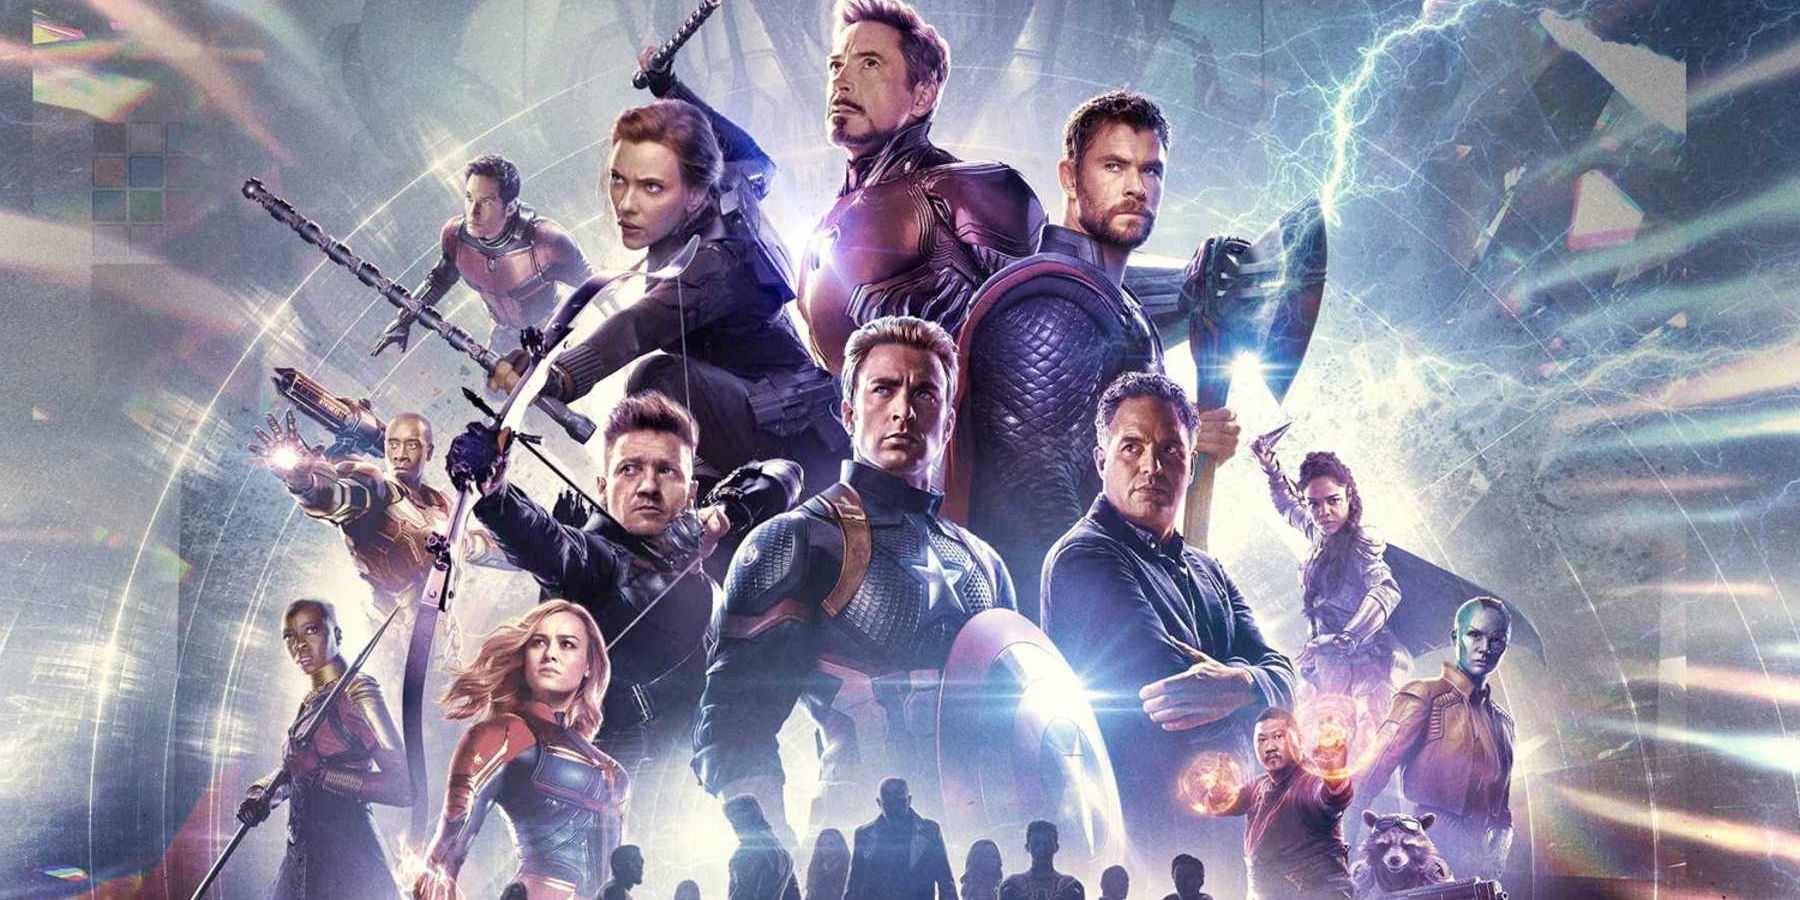 Kevin Feige Calls Endgame The Final Avengers Movie